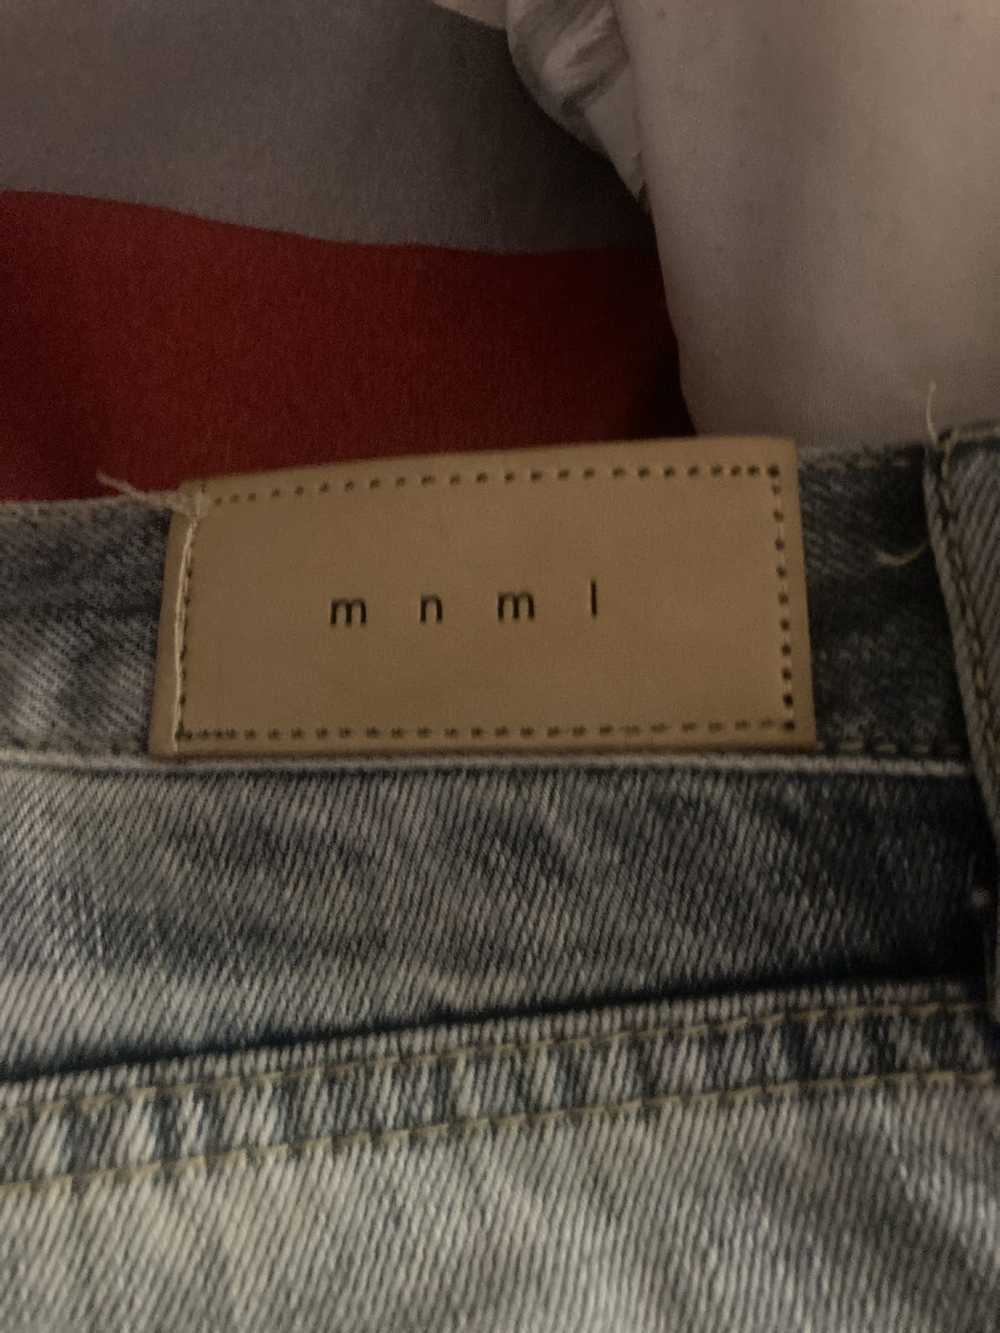 MNML Mnml m5 denim skinny jeans - image 5